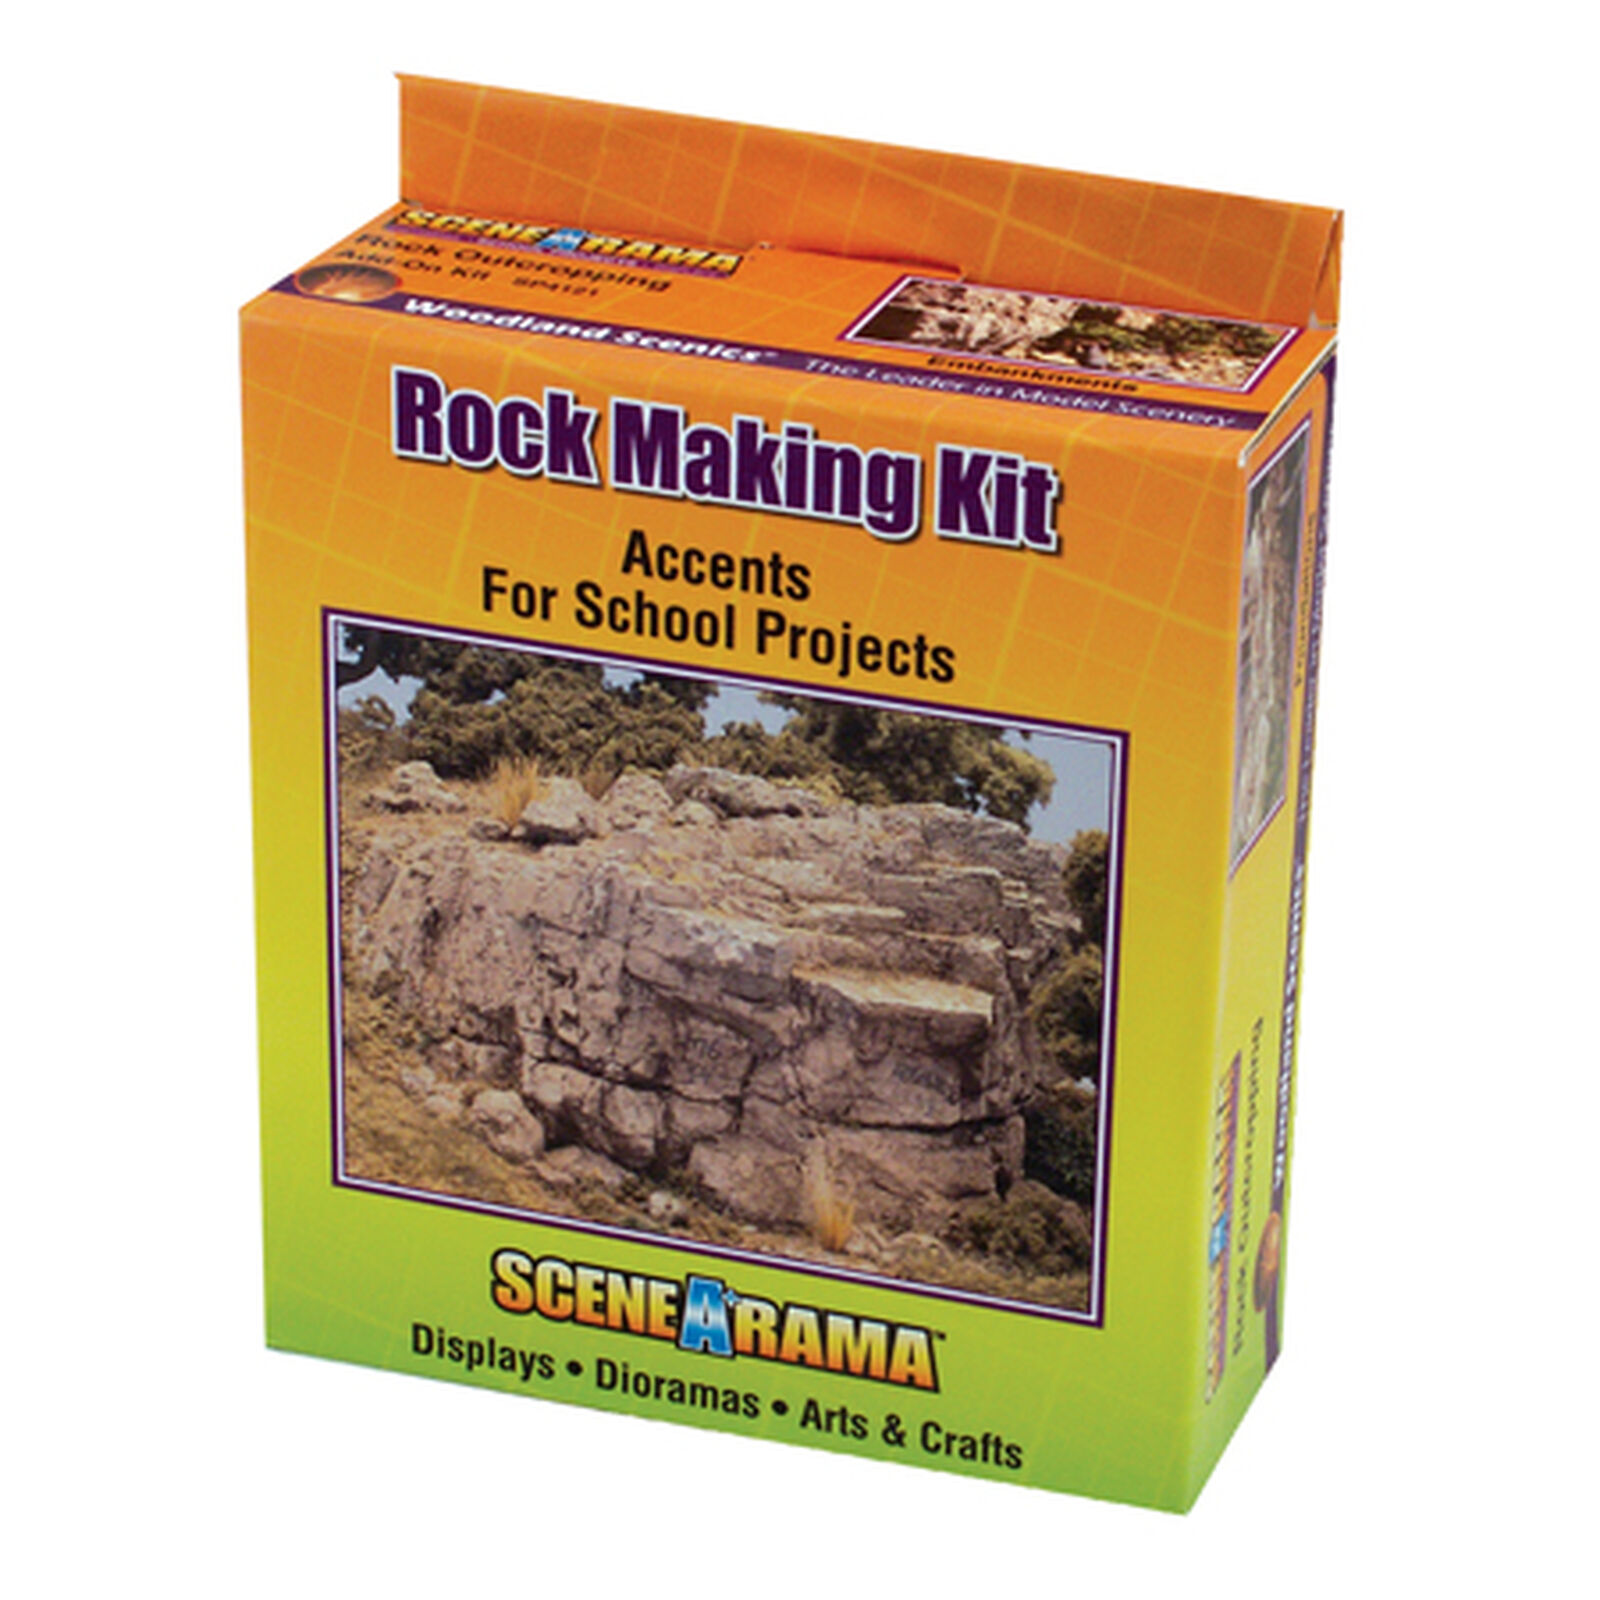 Scene-A-Rama Rock Outcropping Kit